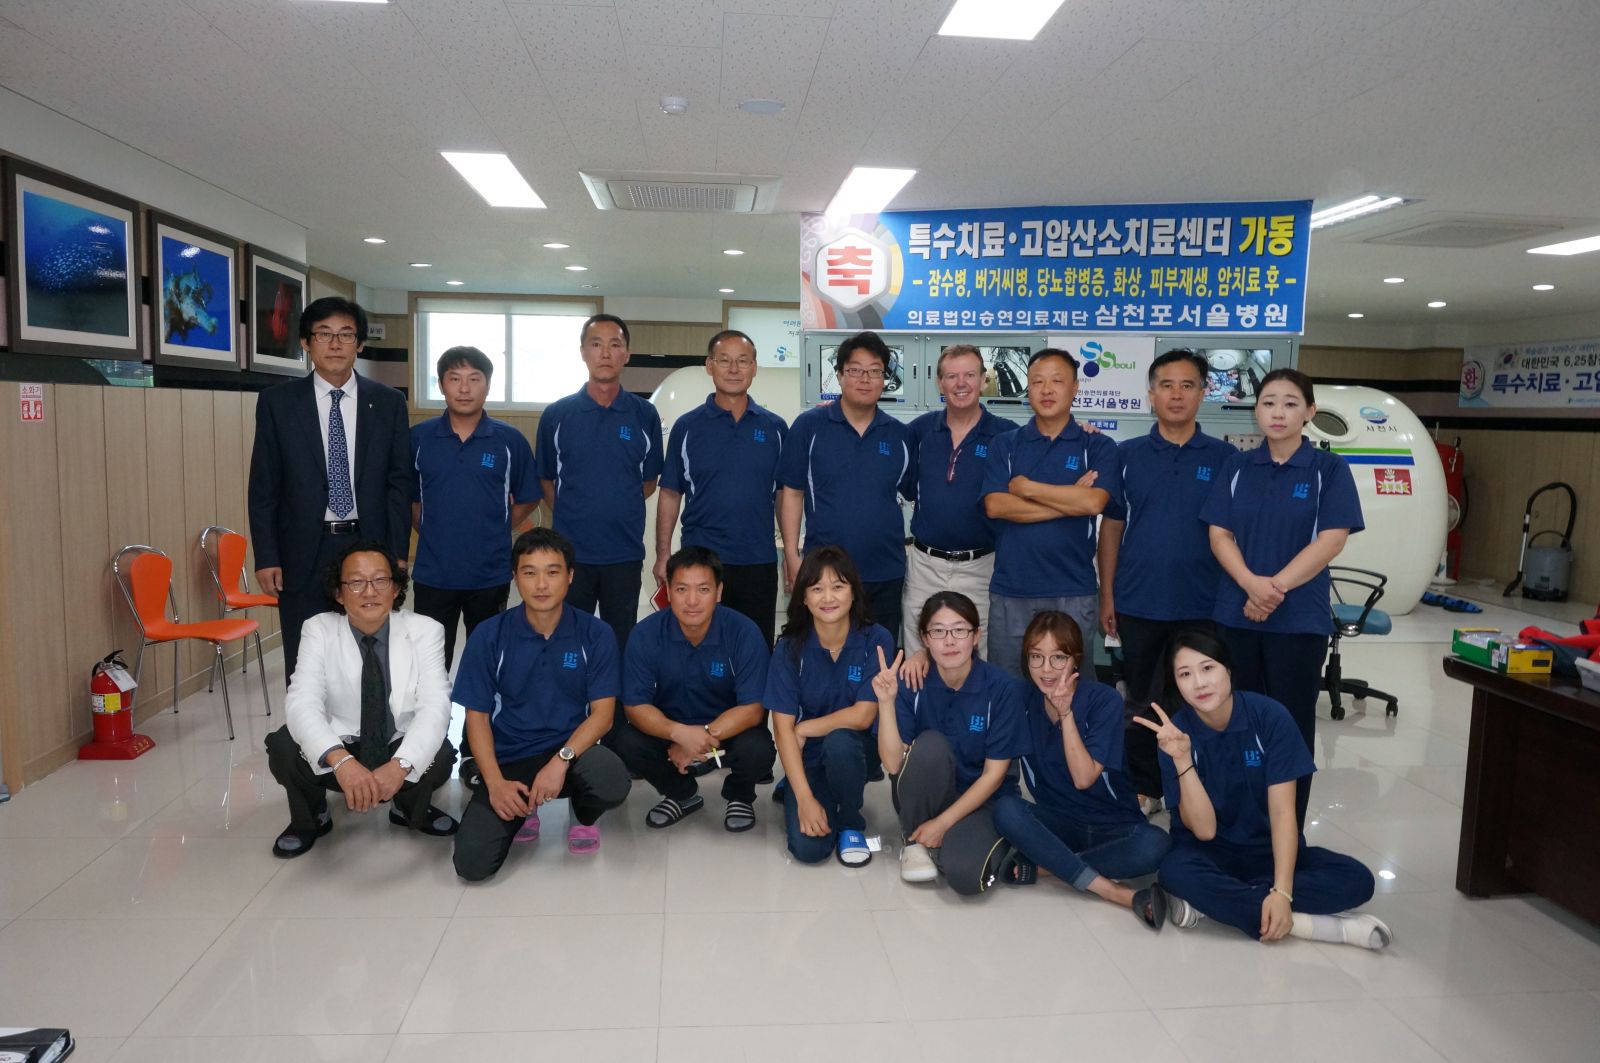 Successful run of Deck Decompression Chamber Training in Korea